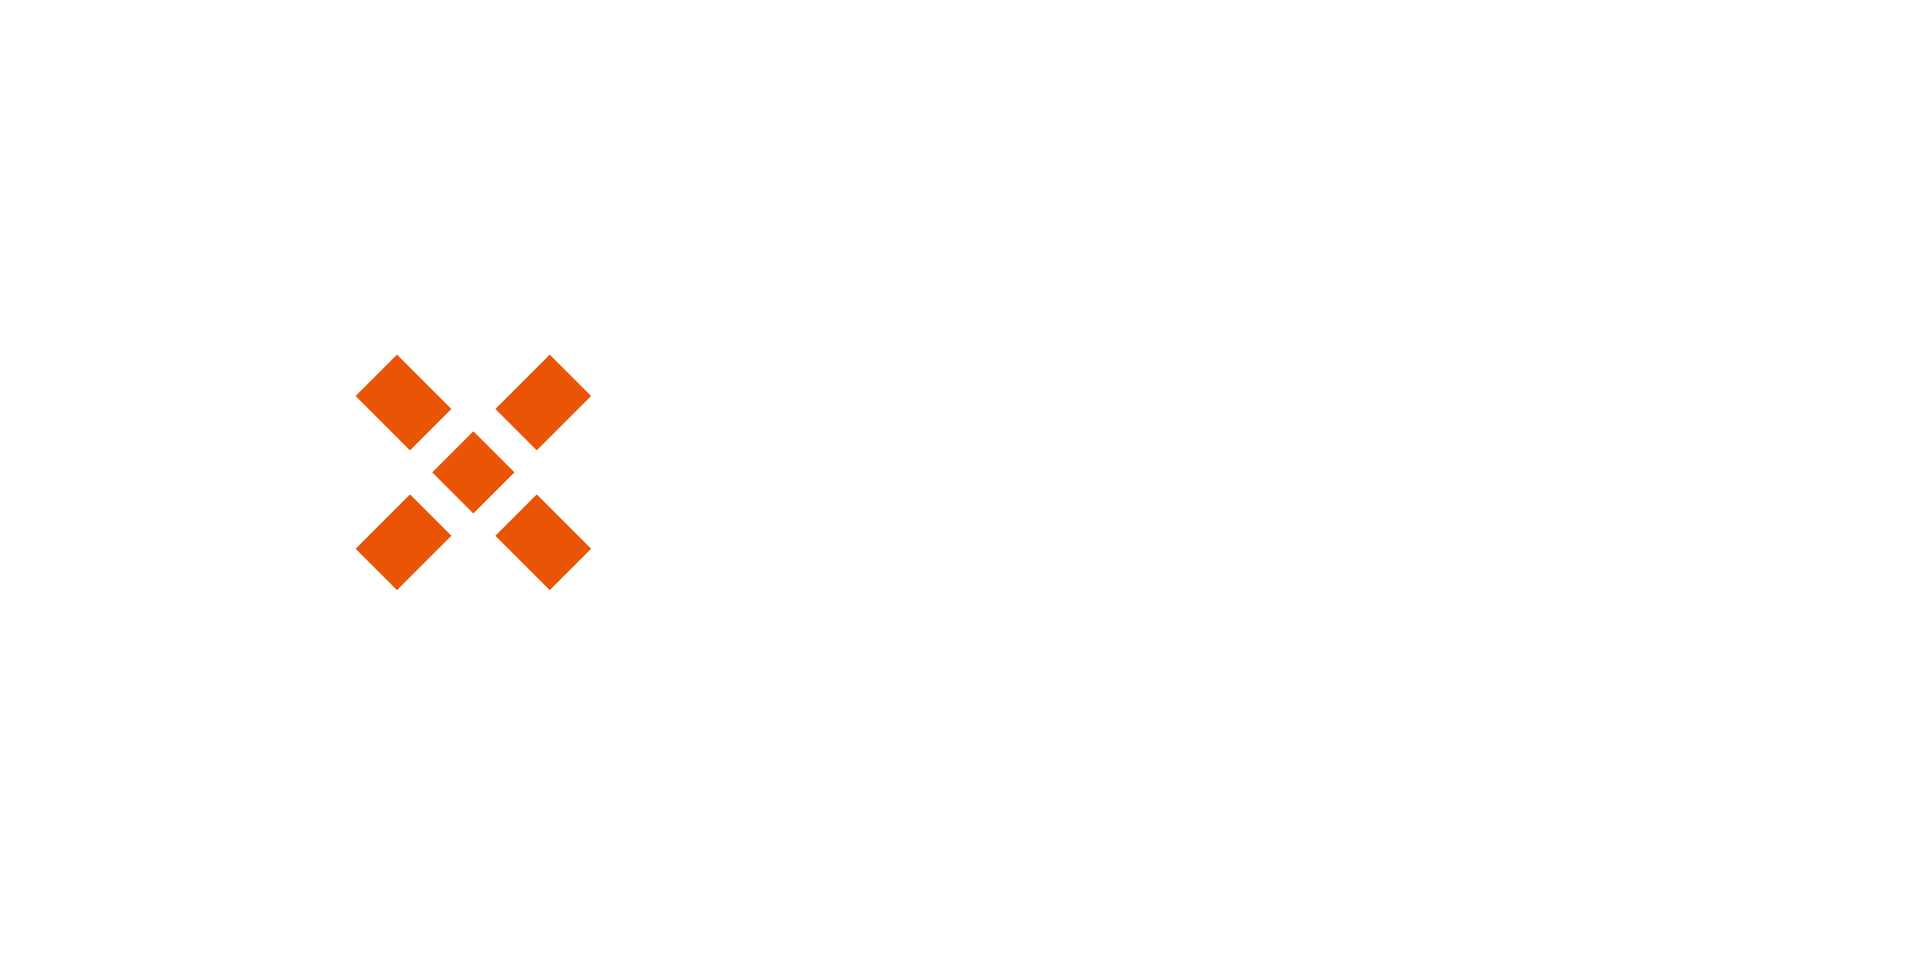 LuxCreo_Logo_simplify_digital_dentistry_wtnbg